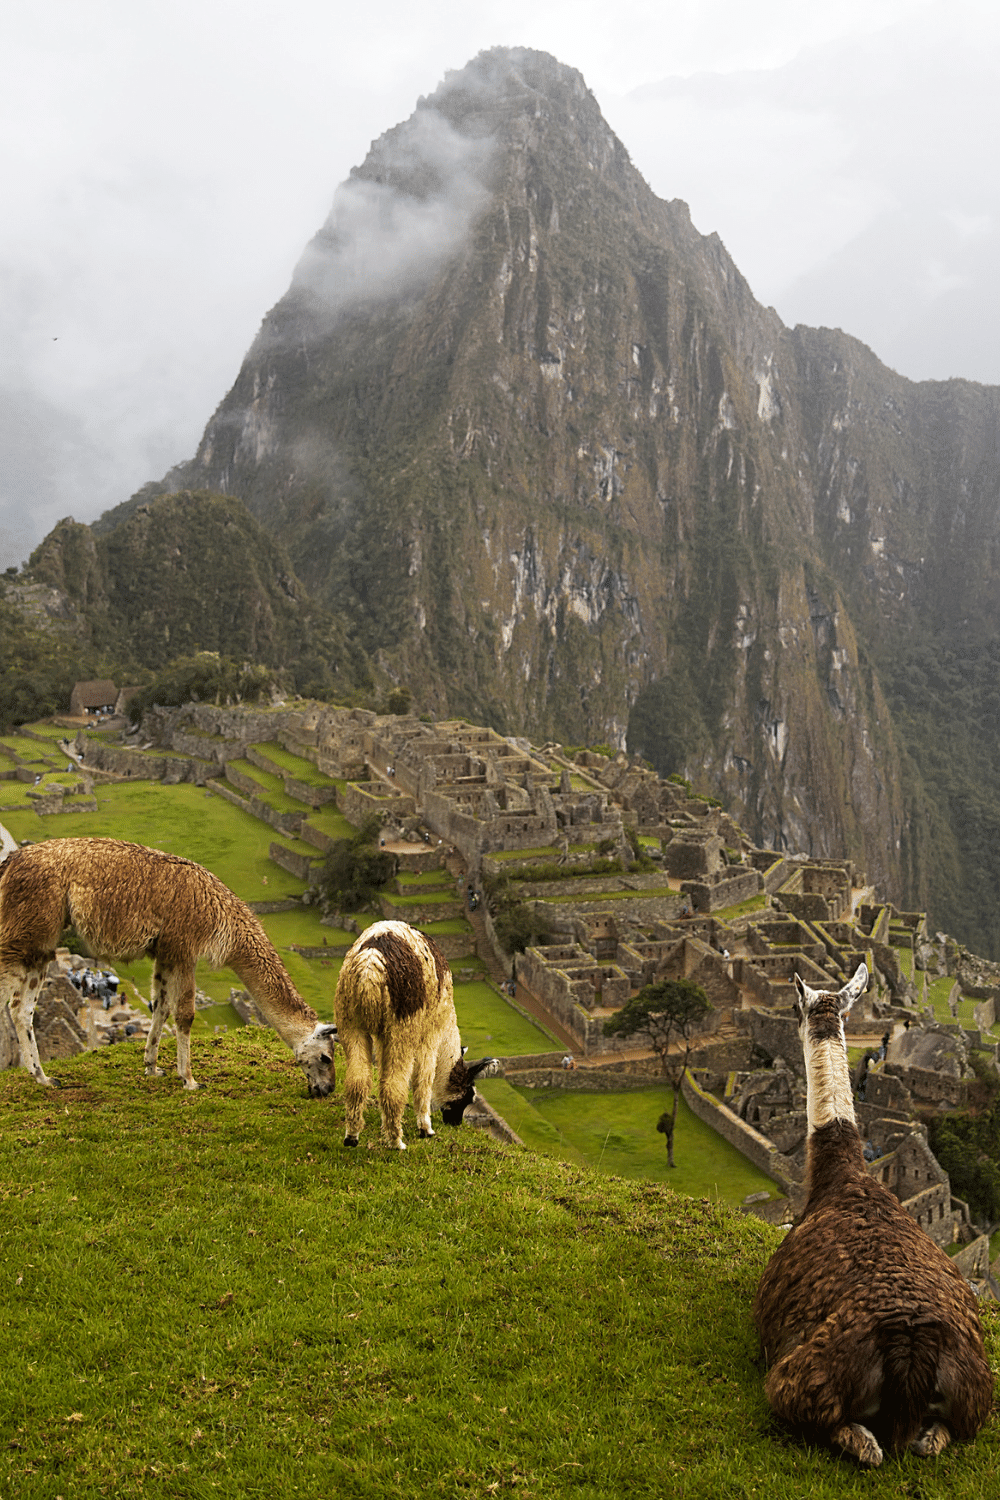 Llamas Thrive Well In Mountainous Regions